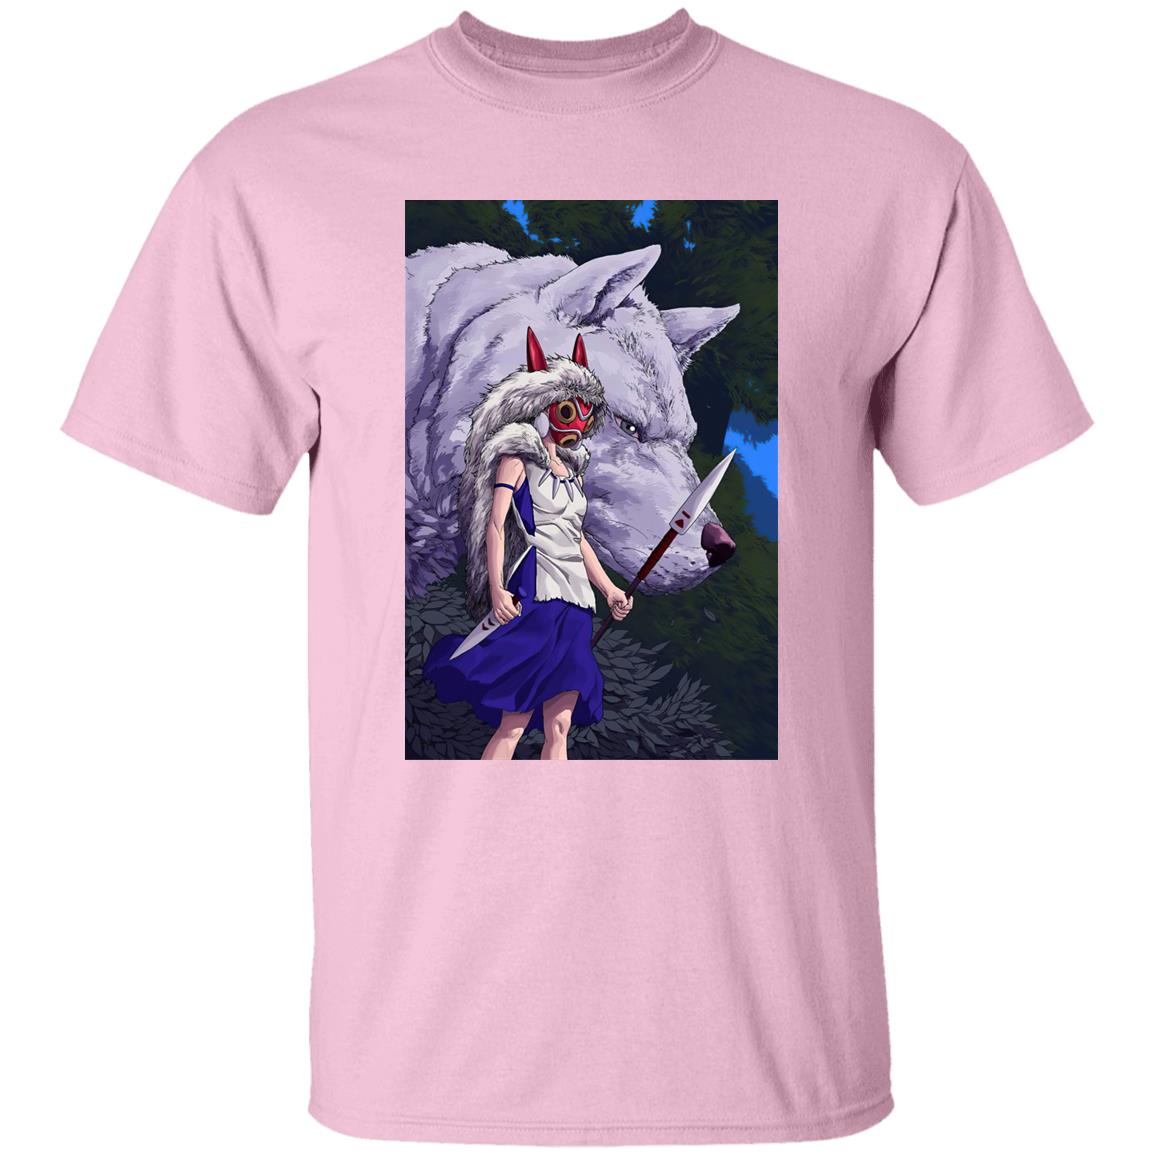 Princess Mononoke And Her Weapons T Shirt - Ghibli Store